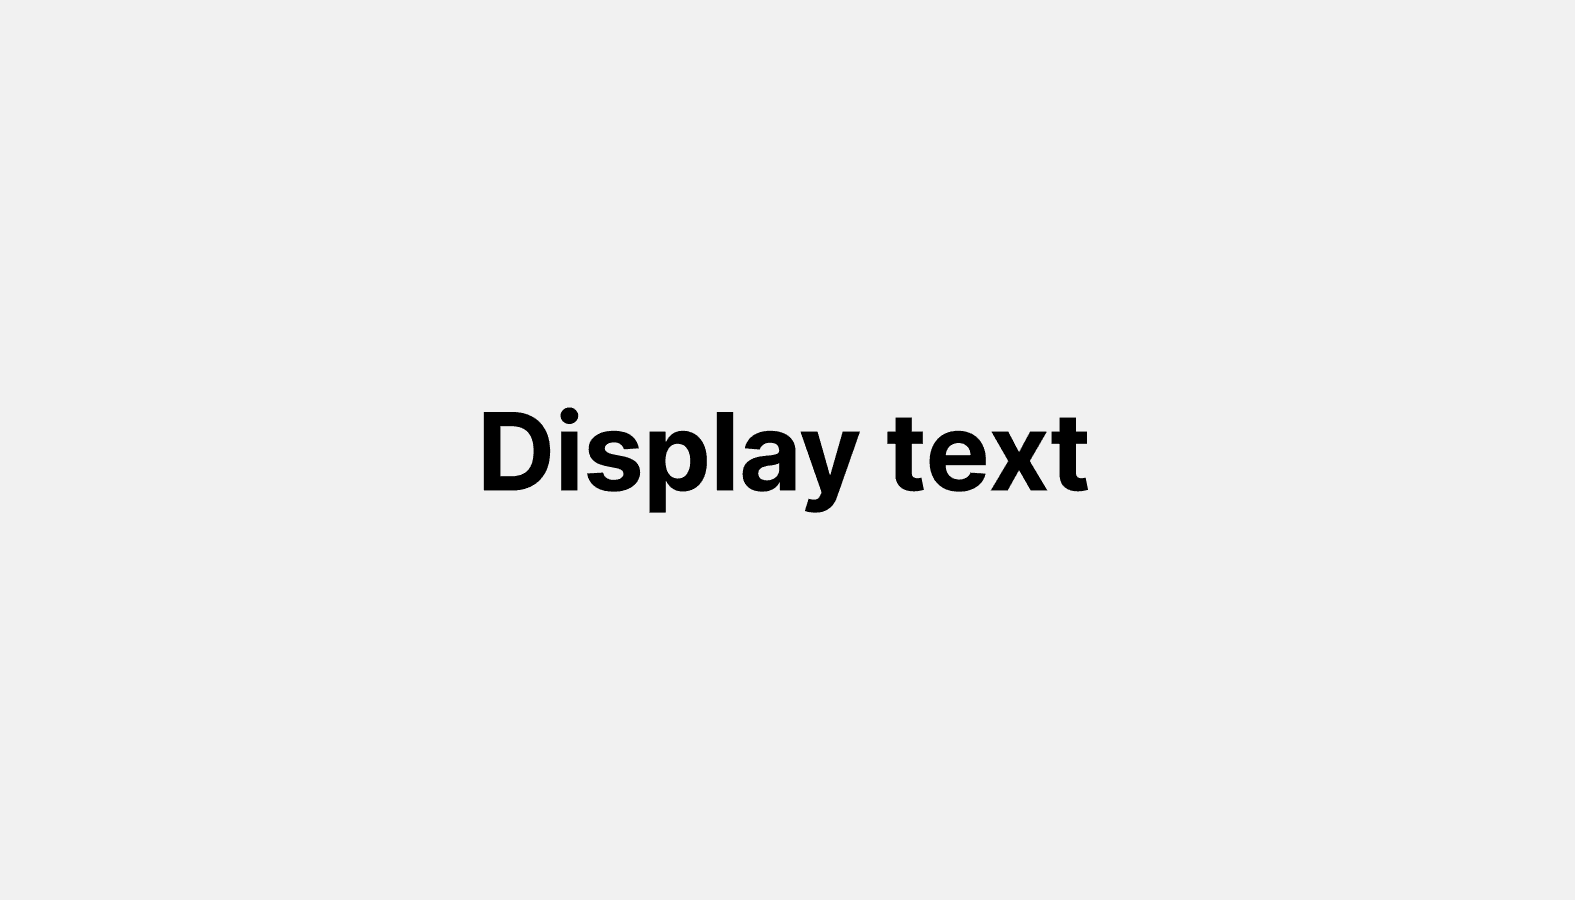 Display text